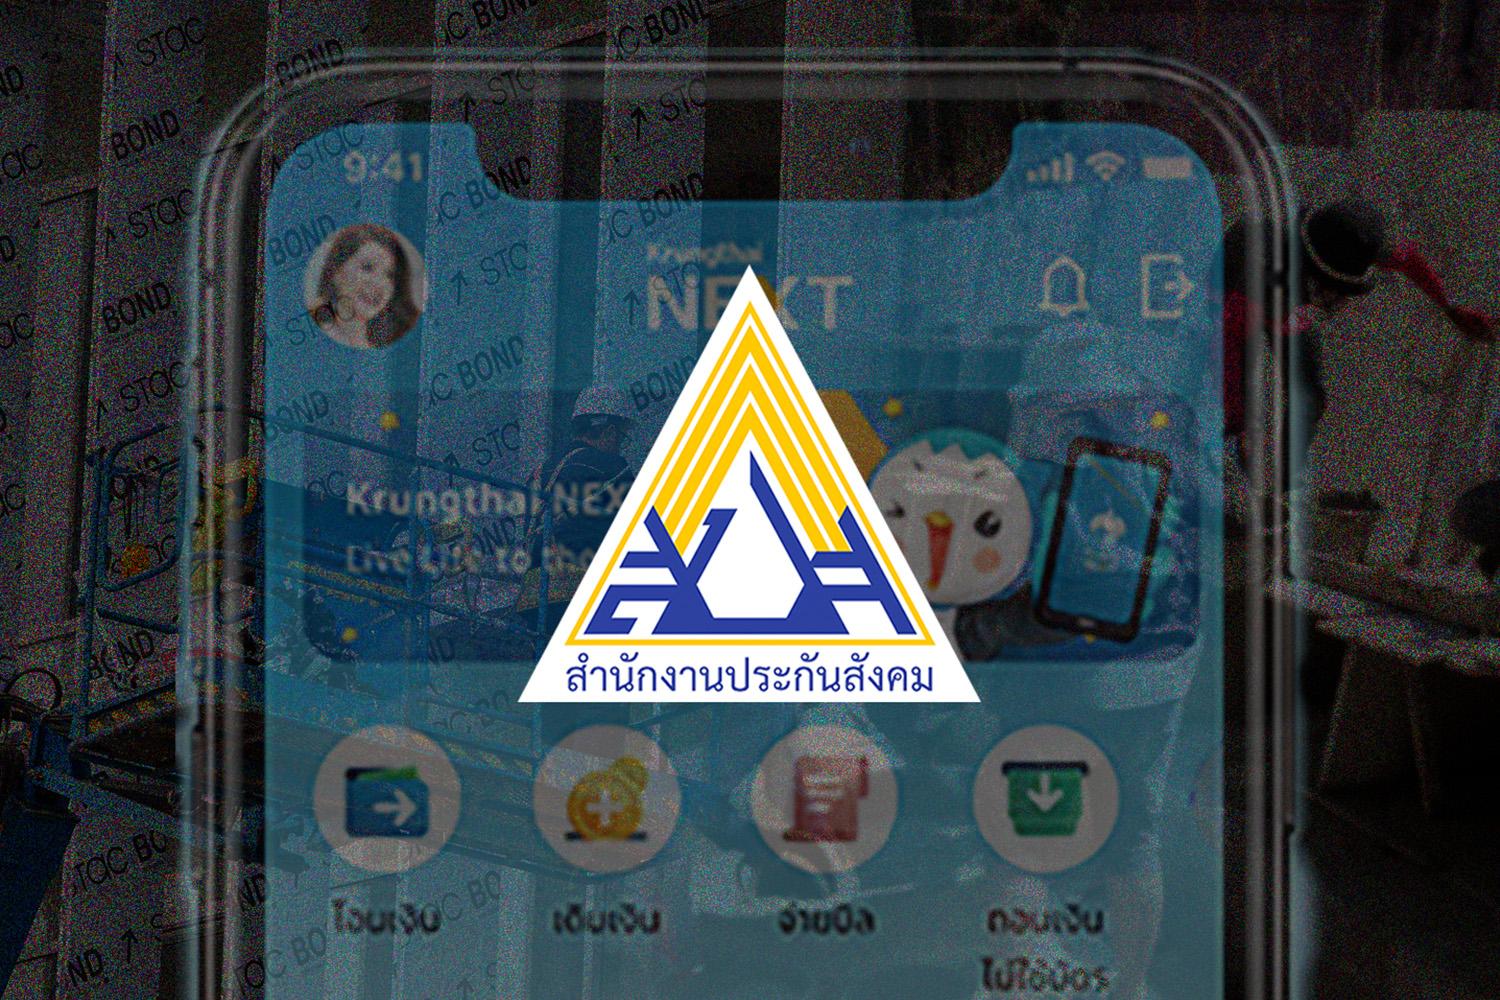 krungthai-next-social-security-section40-39-shopee-SPACEBAR-Hero.jpg